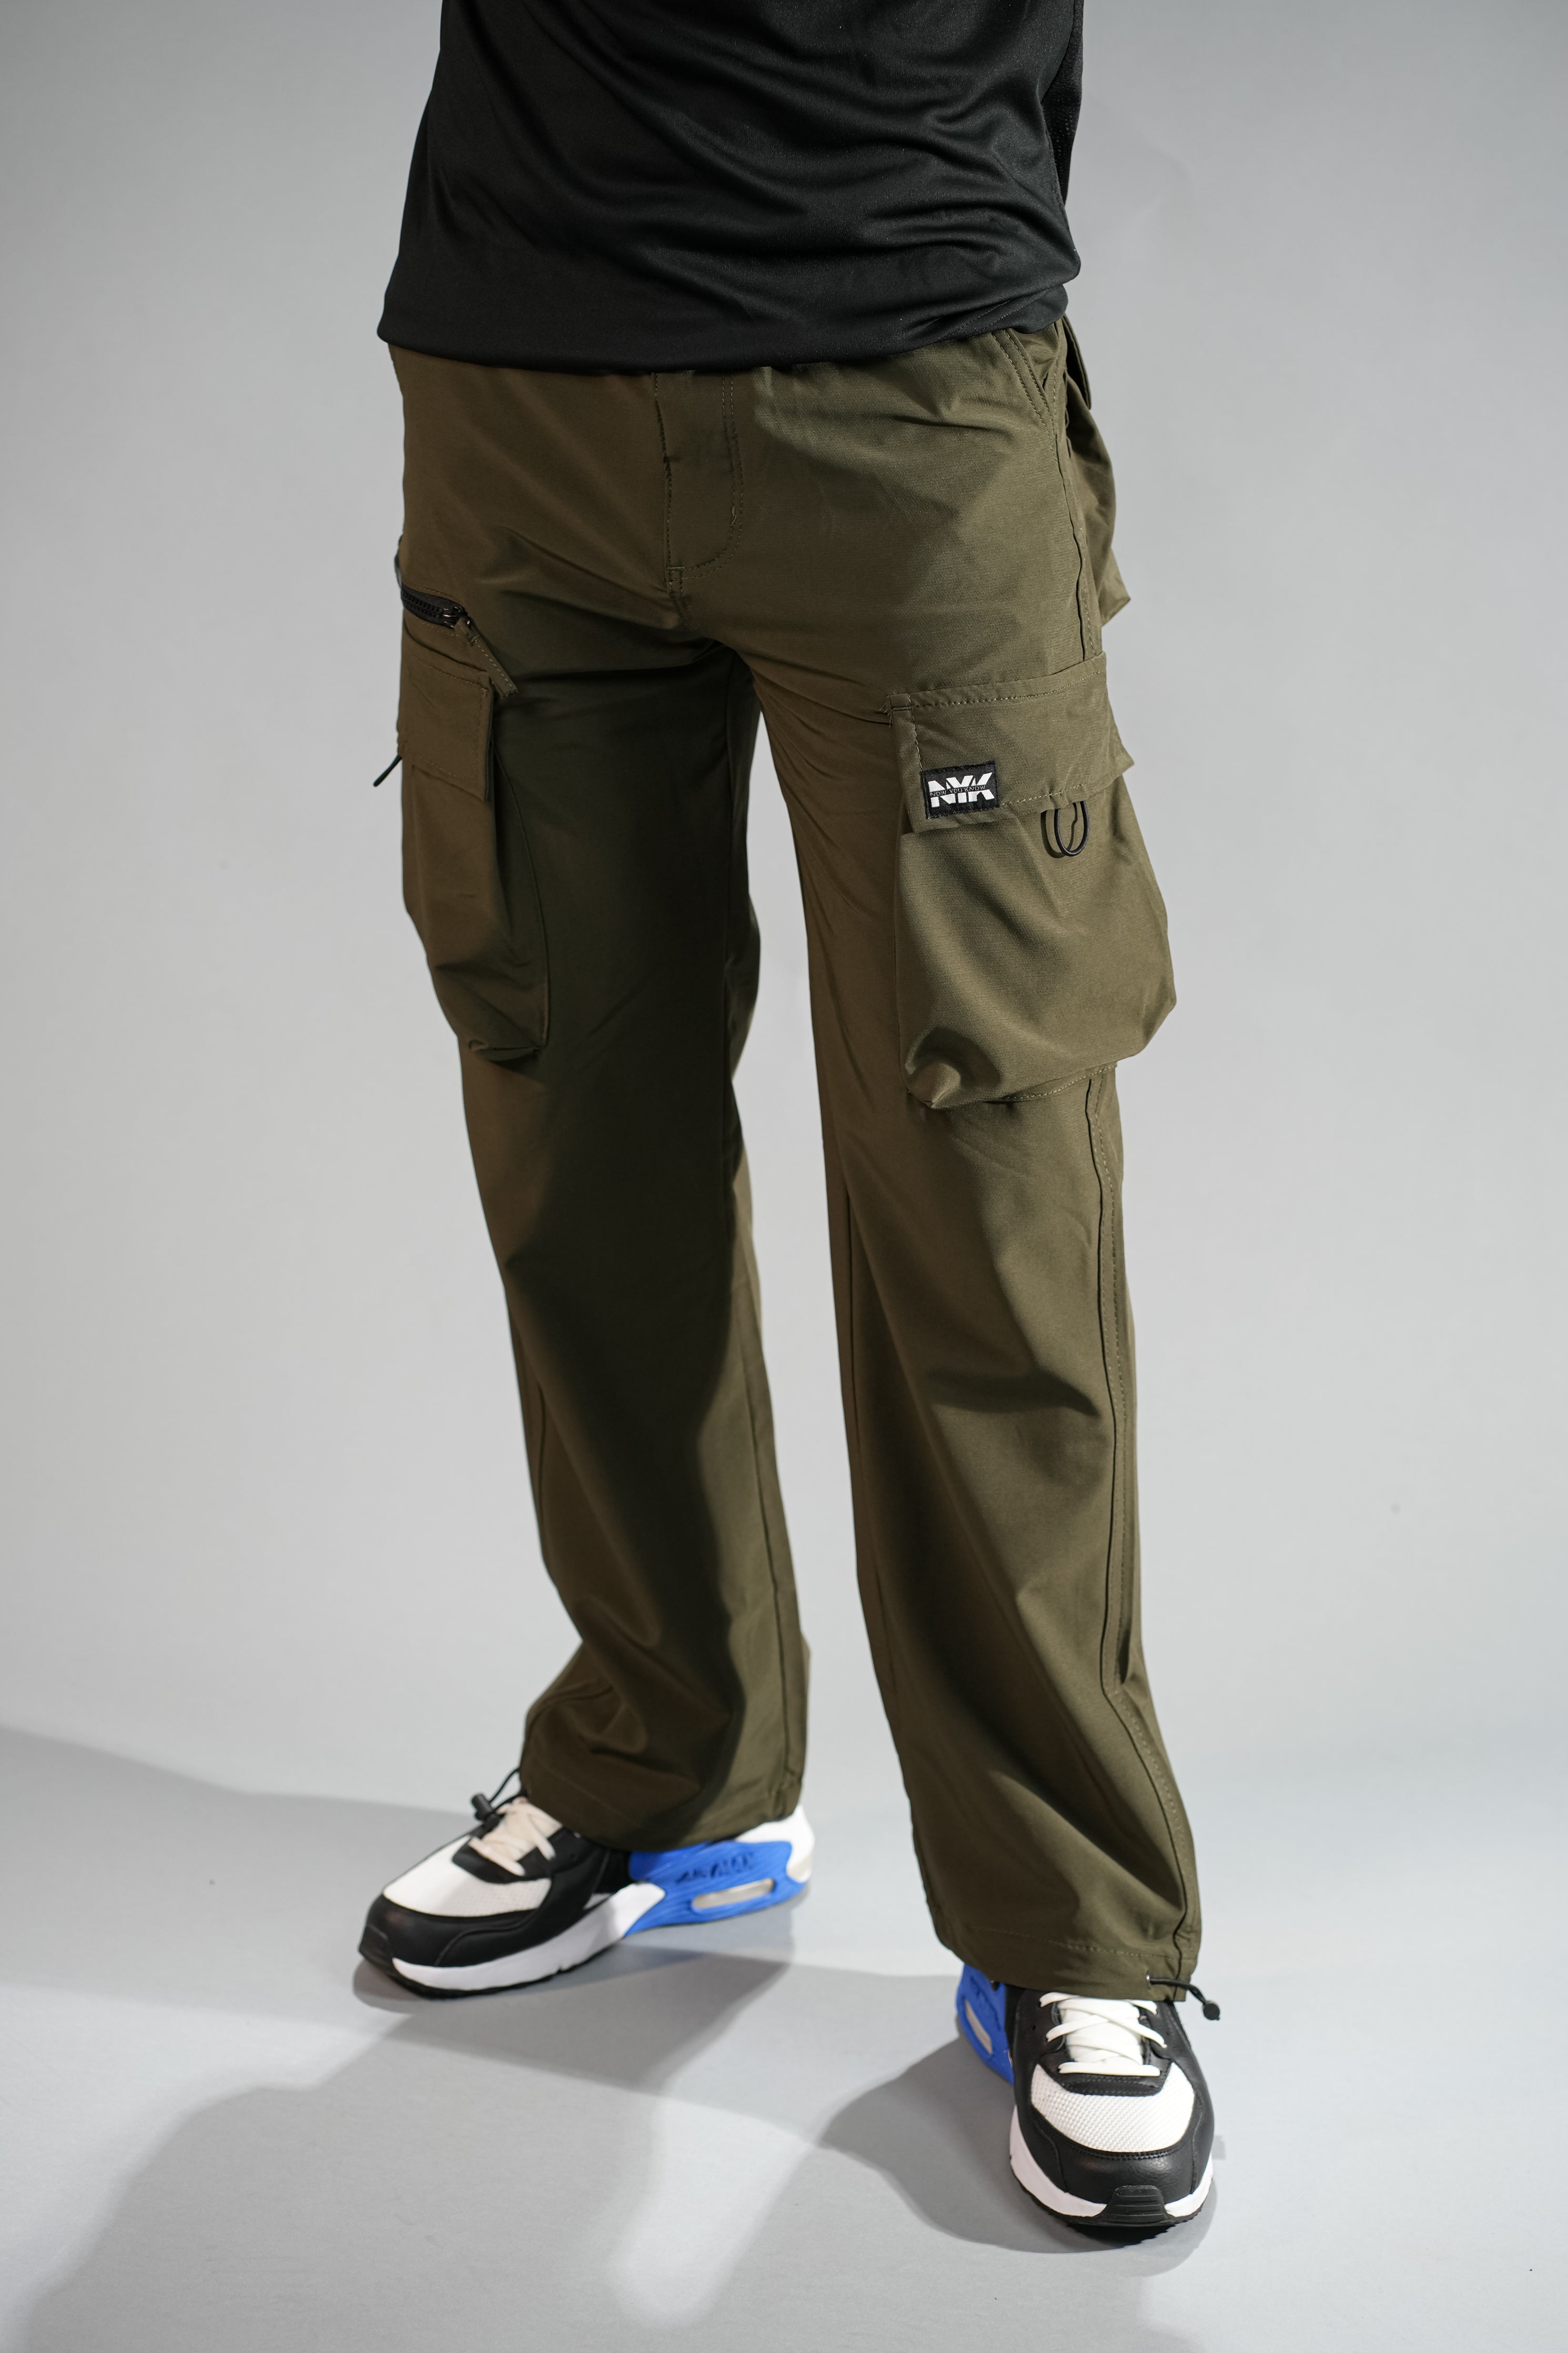 NYK Men's Millennium Cargo Pants